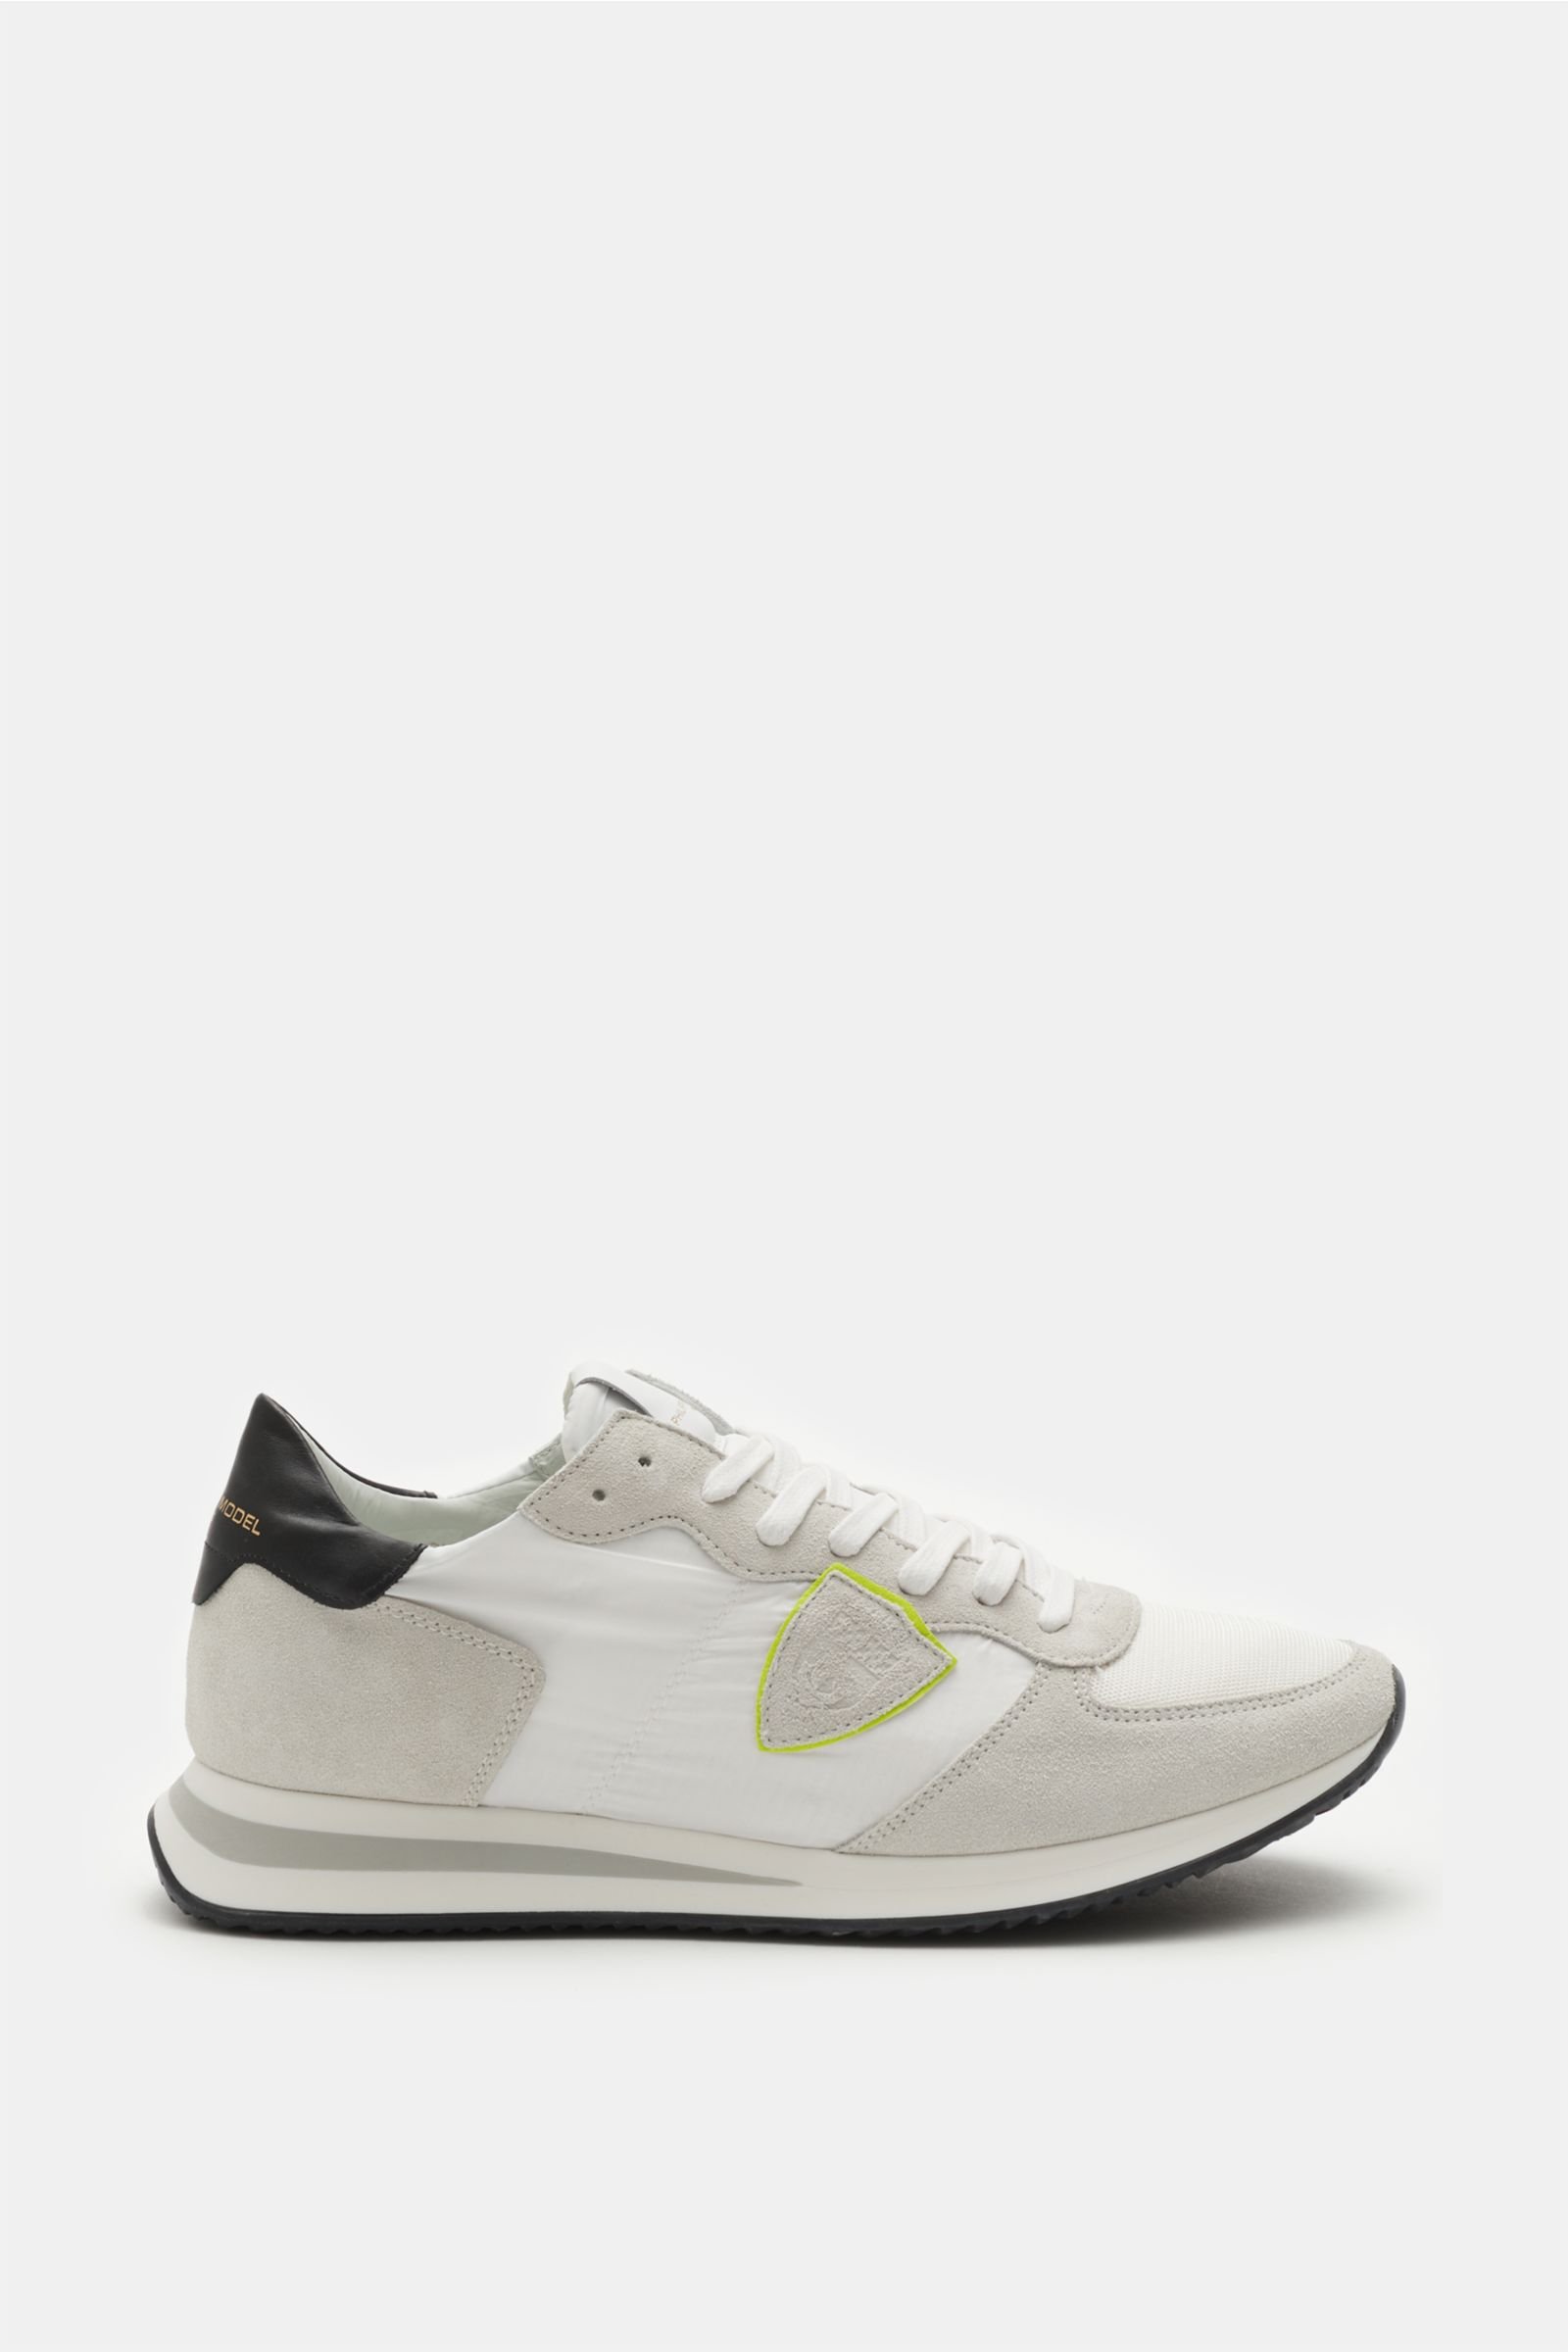 PHILIPPE MODEL sneakers 'Trpx Mondial' white/light grey | BRAUN Hamburg